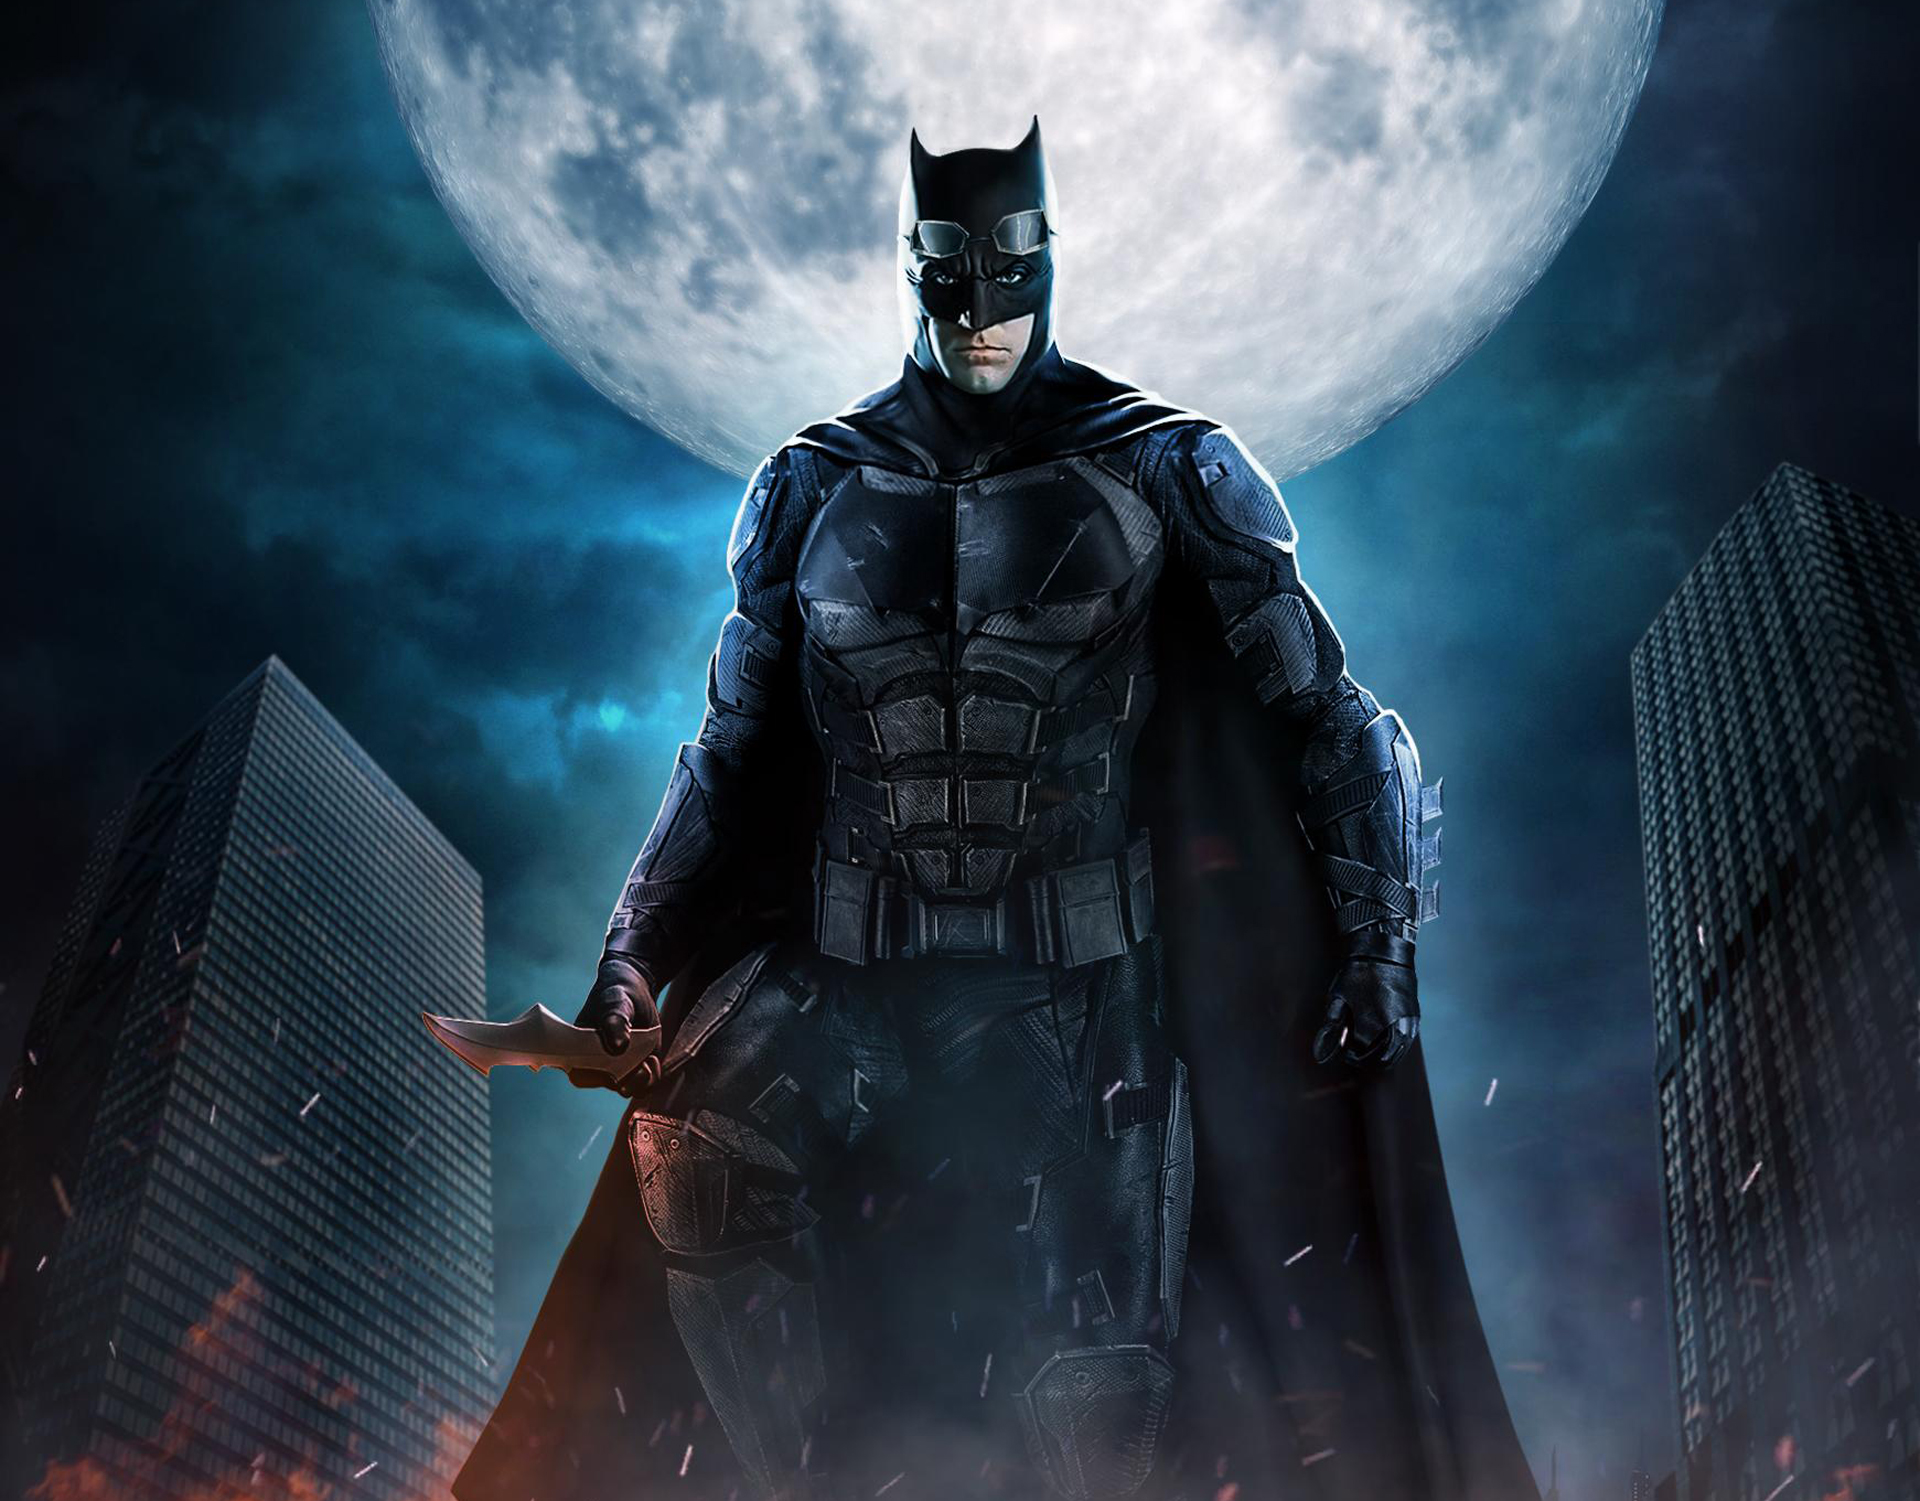 batman art wallpaper,batman,superhero,fictional character,justice league,movie